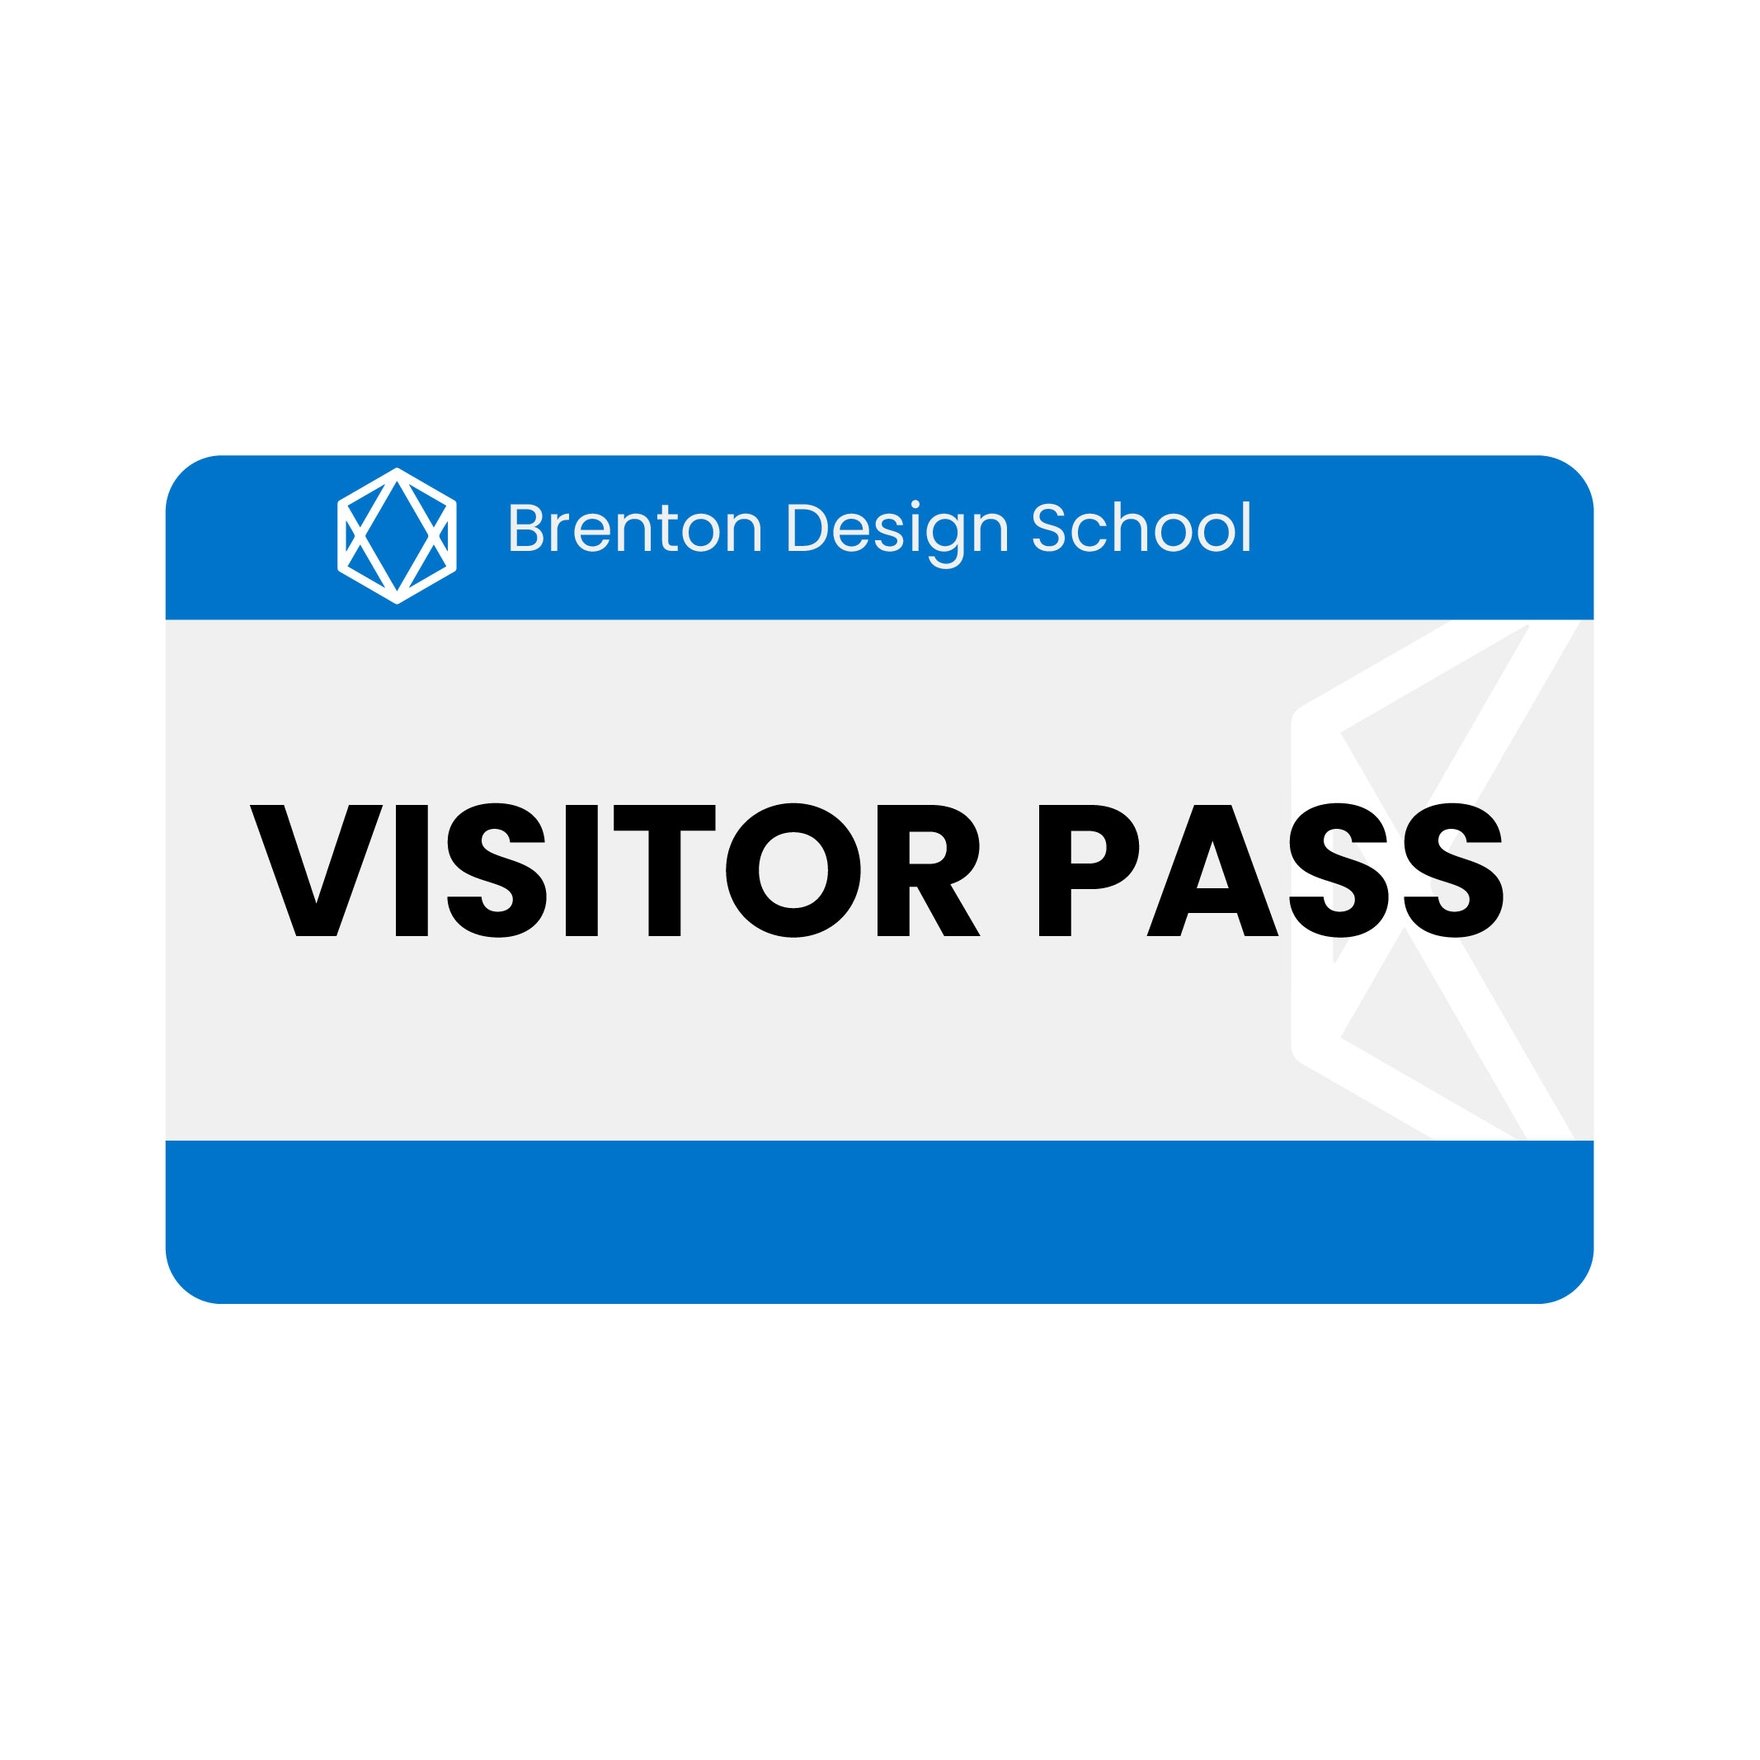 Visitor Badge